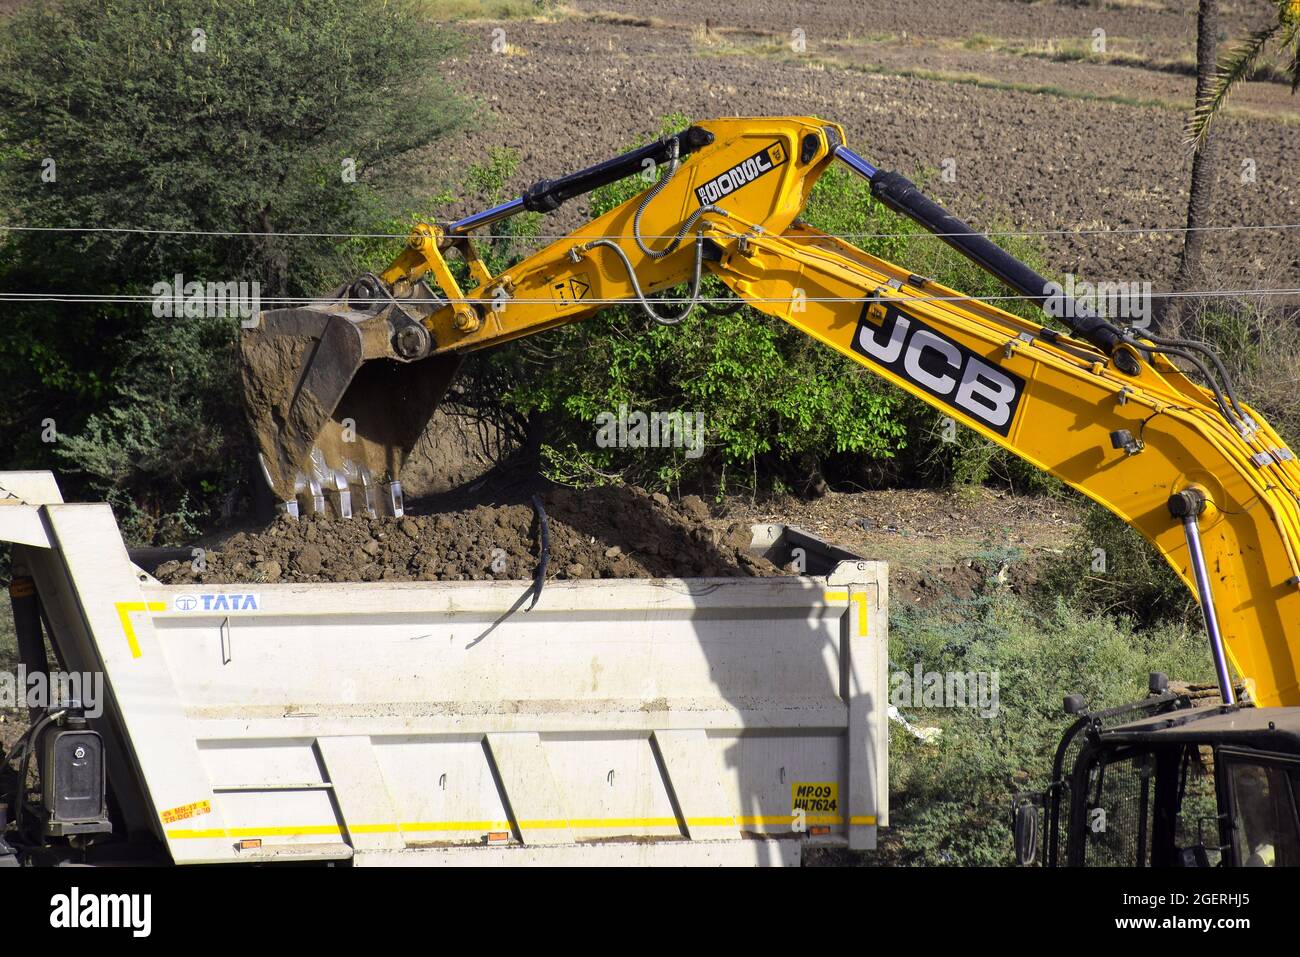 08-05-2020,Bhadapipalya, Madhya Pradesh, India. The modern excavator JCB performs excavation work on the construction site Stock Photo